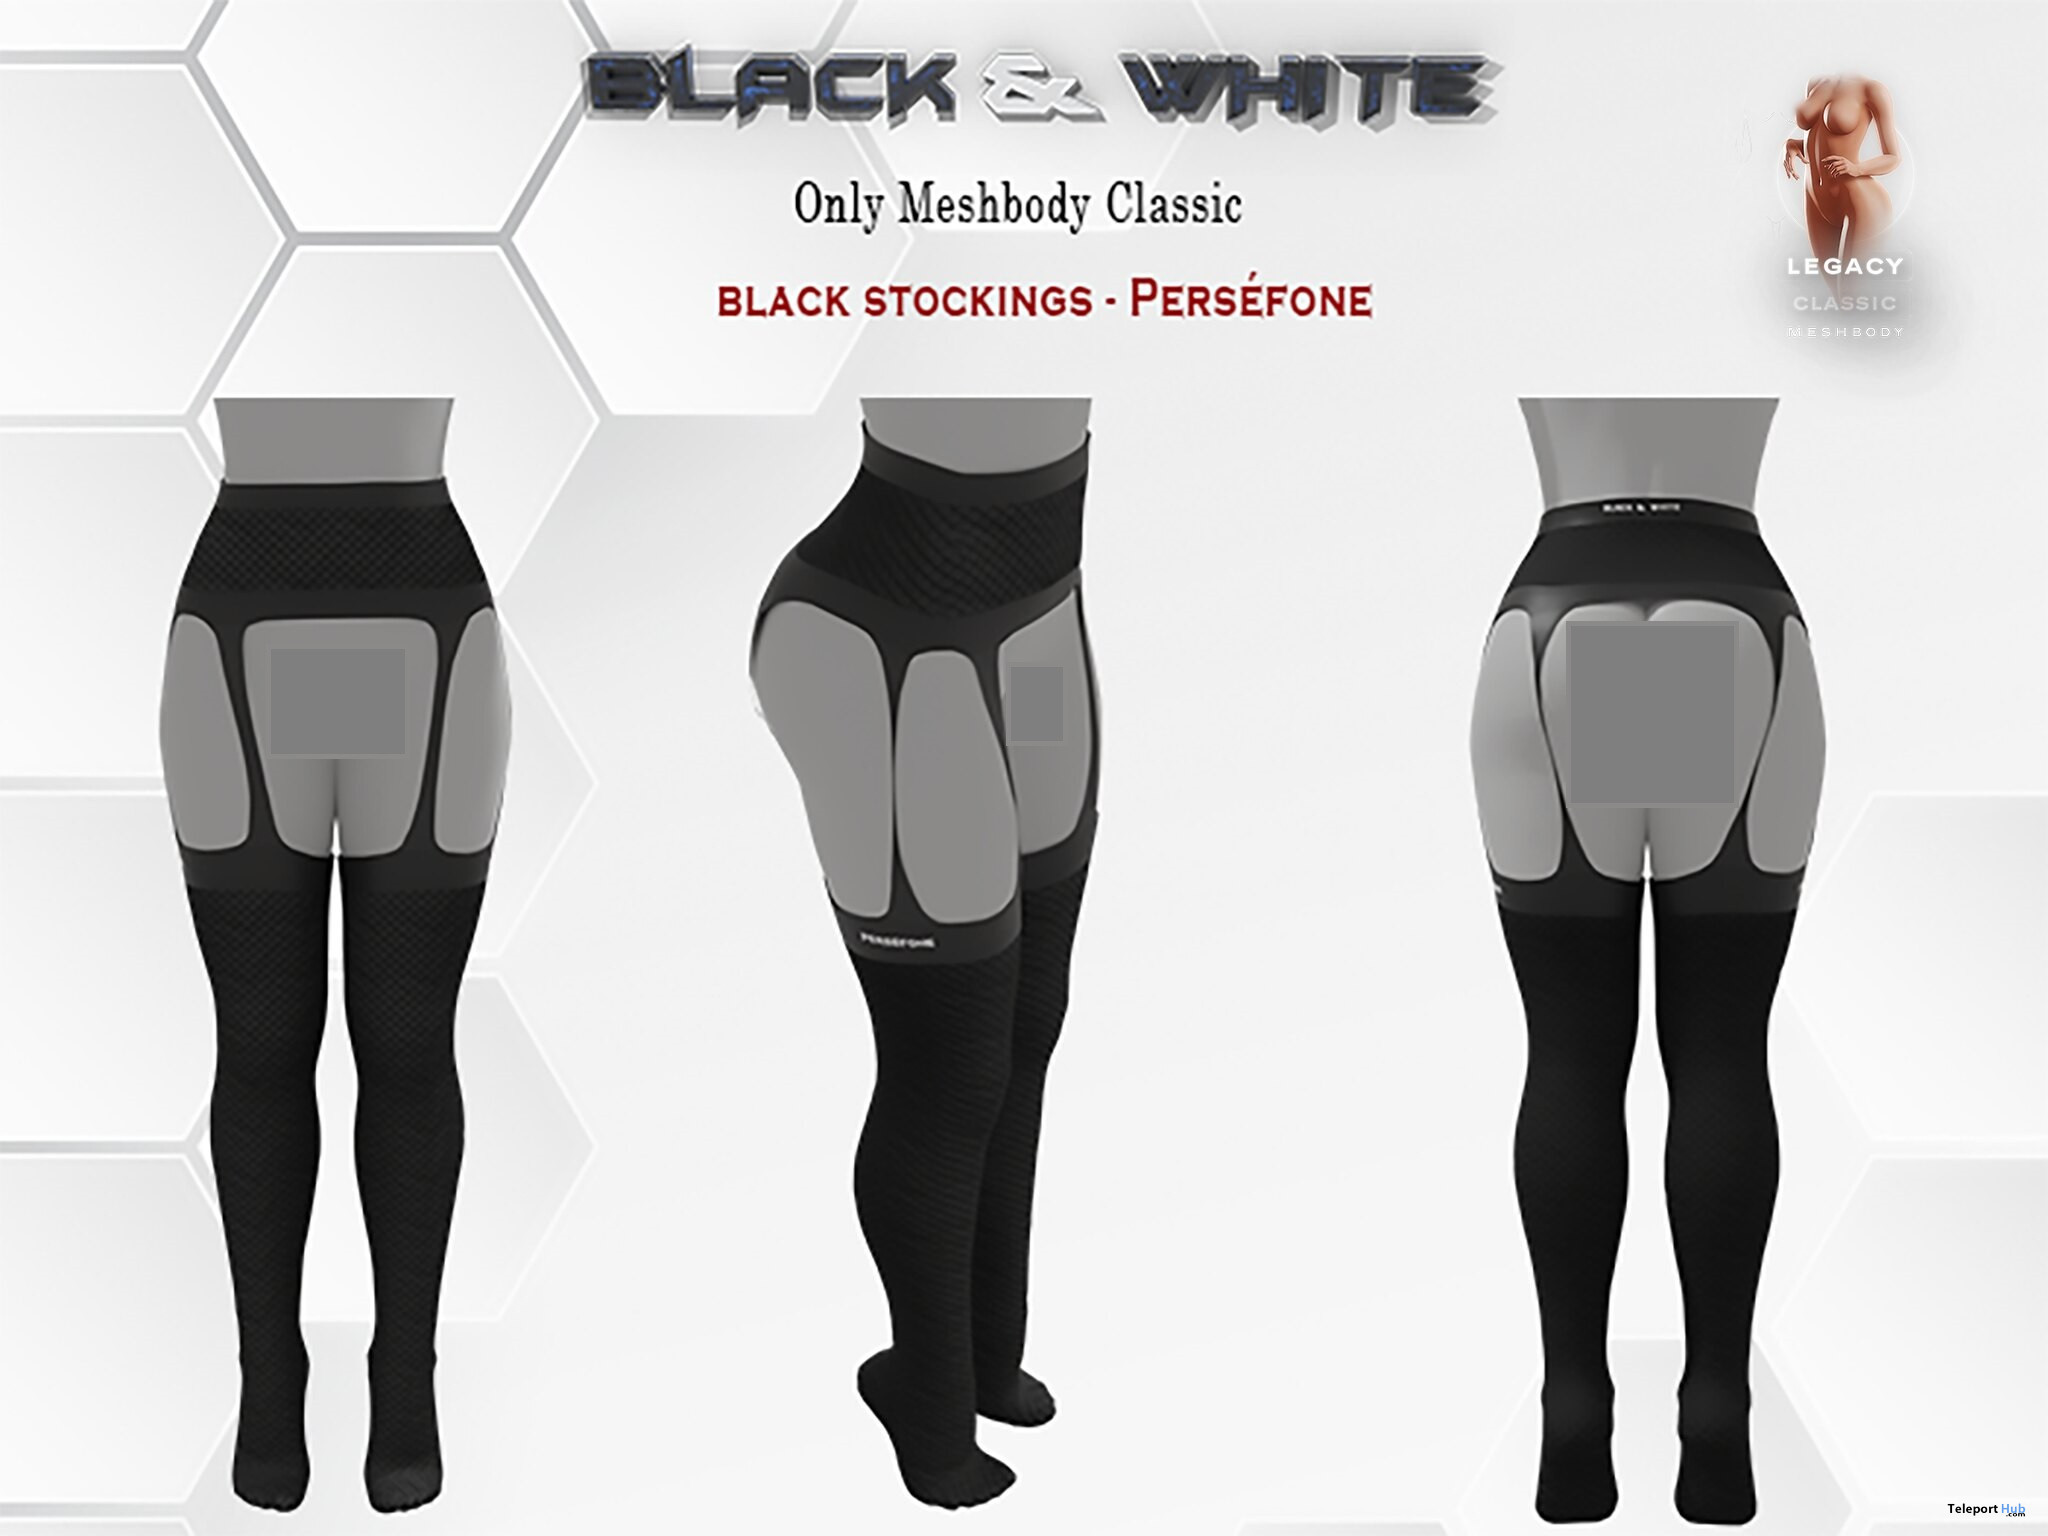 Persefone Black Stockings For Meshbody Classic 1L Promo Gift by BLACK & WHITE - Teleport Hub - teleporthub.com